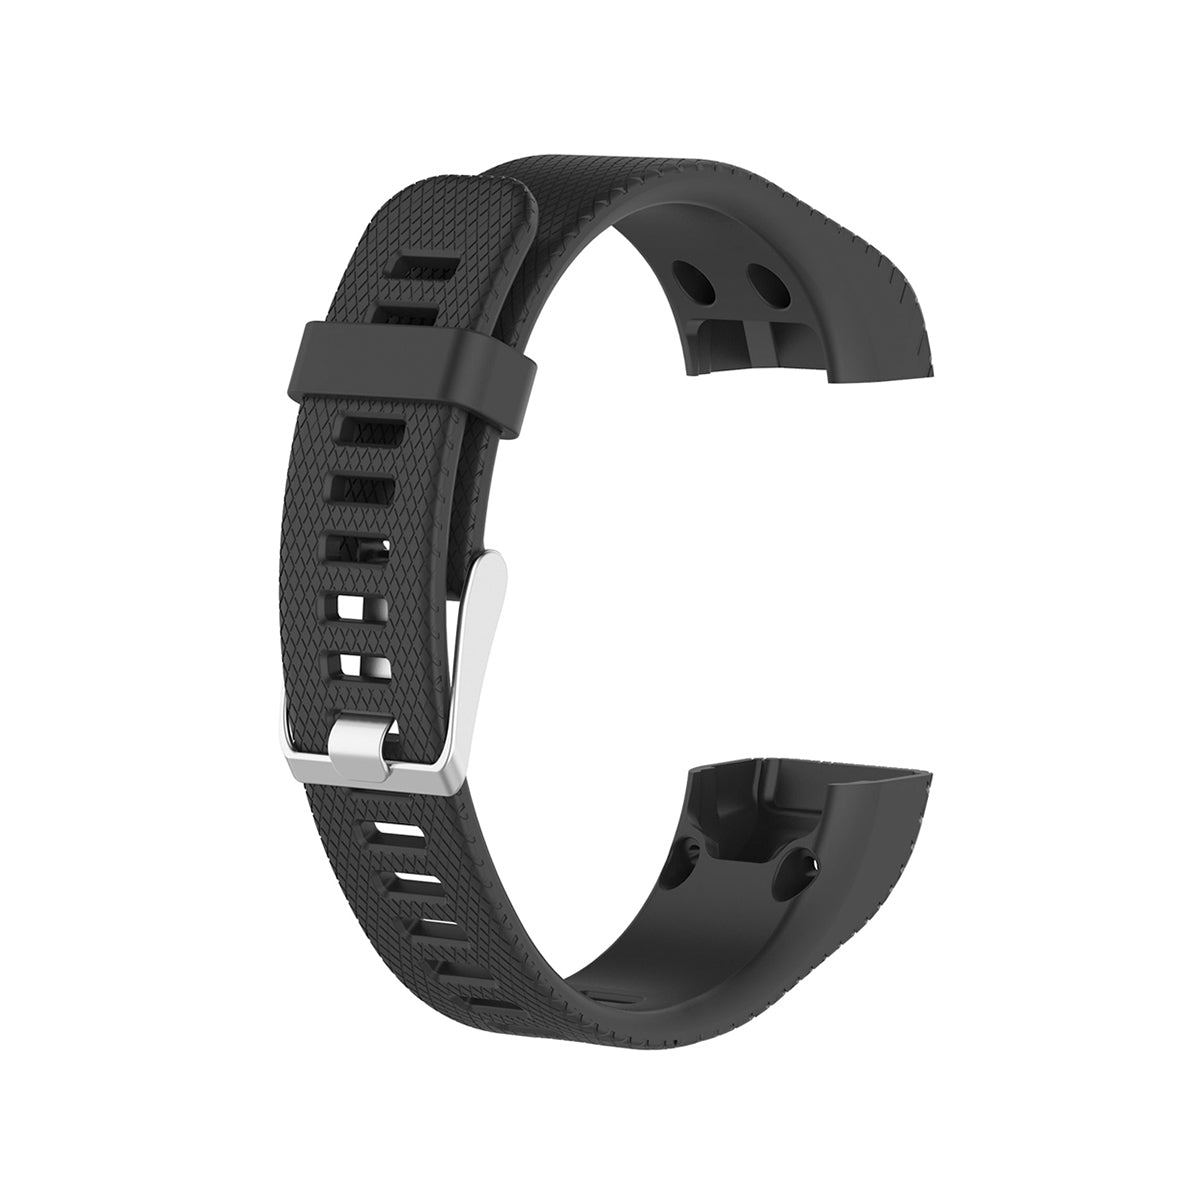 Smartwatch Band Adjustable Straps for Garmin-Forerunner 920XT Bracelet  Wristband